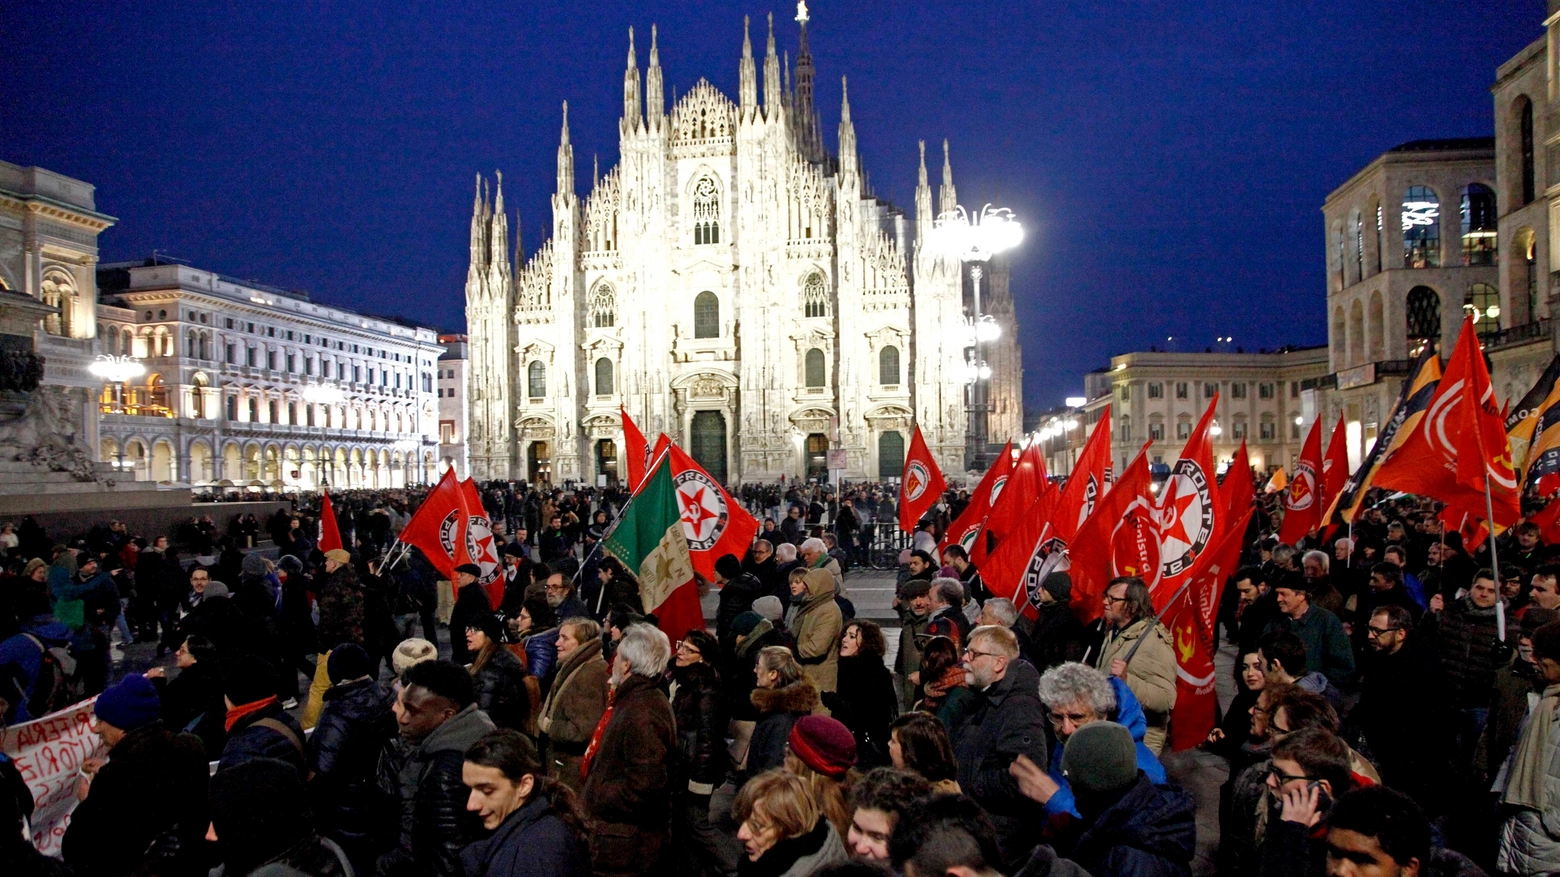 Corteo antifascista in piazza Duomo a Milano